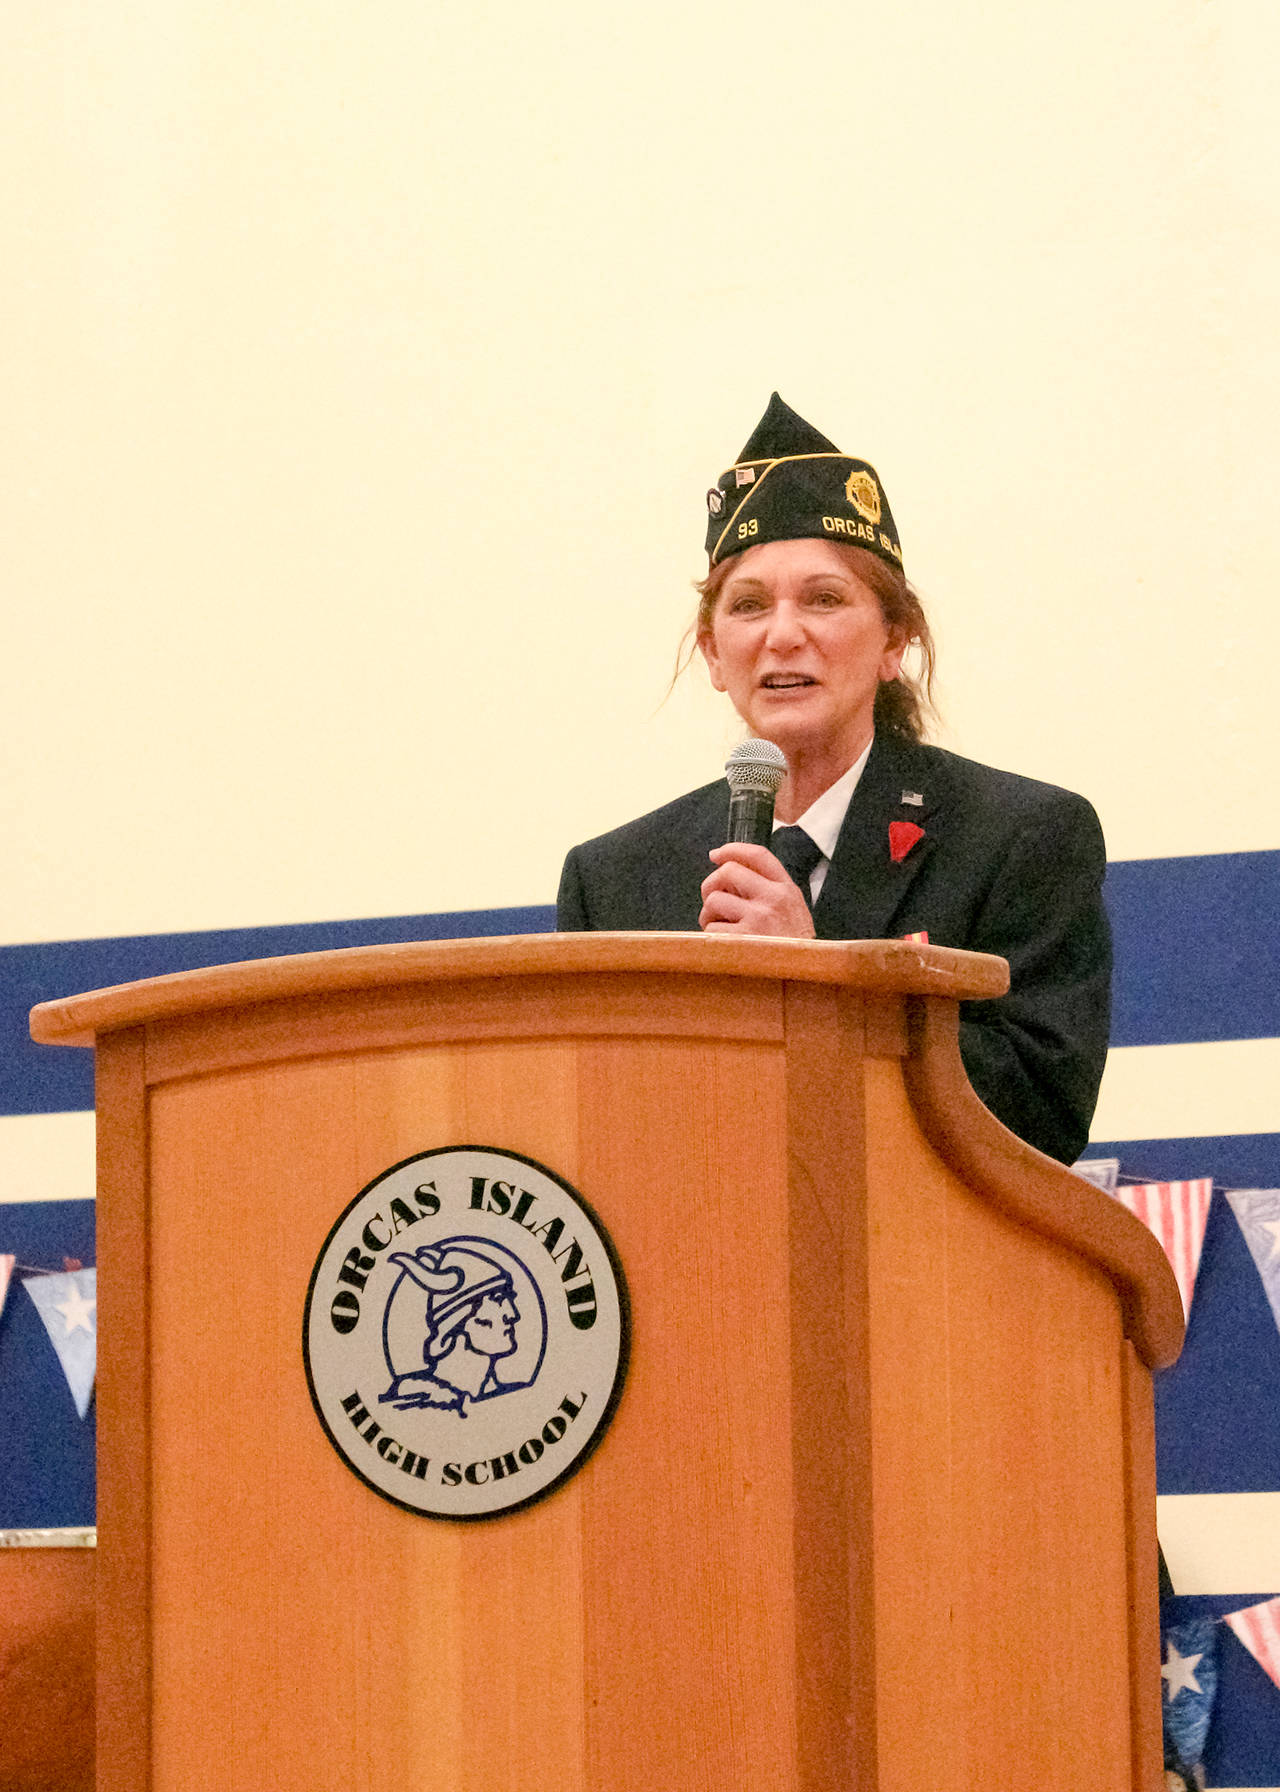 Orcas Island School honors veterans